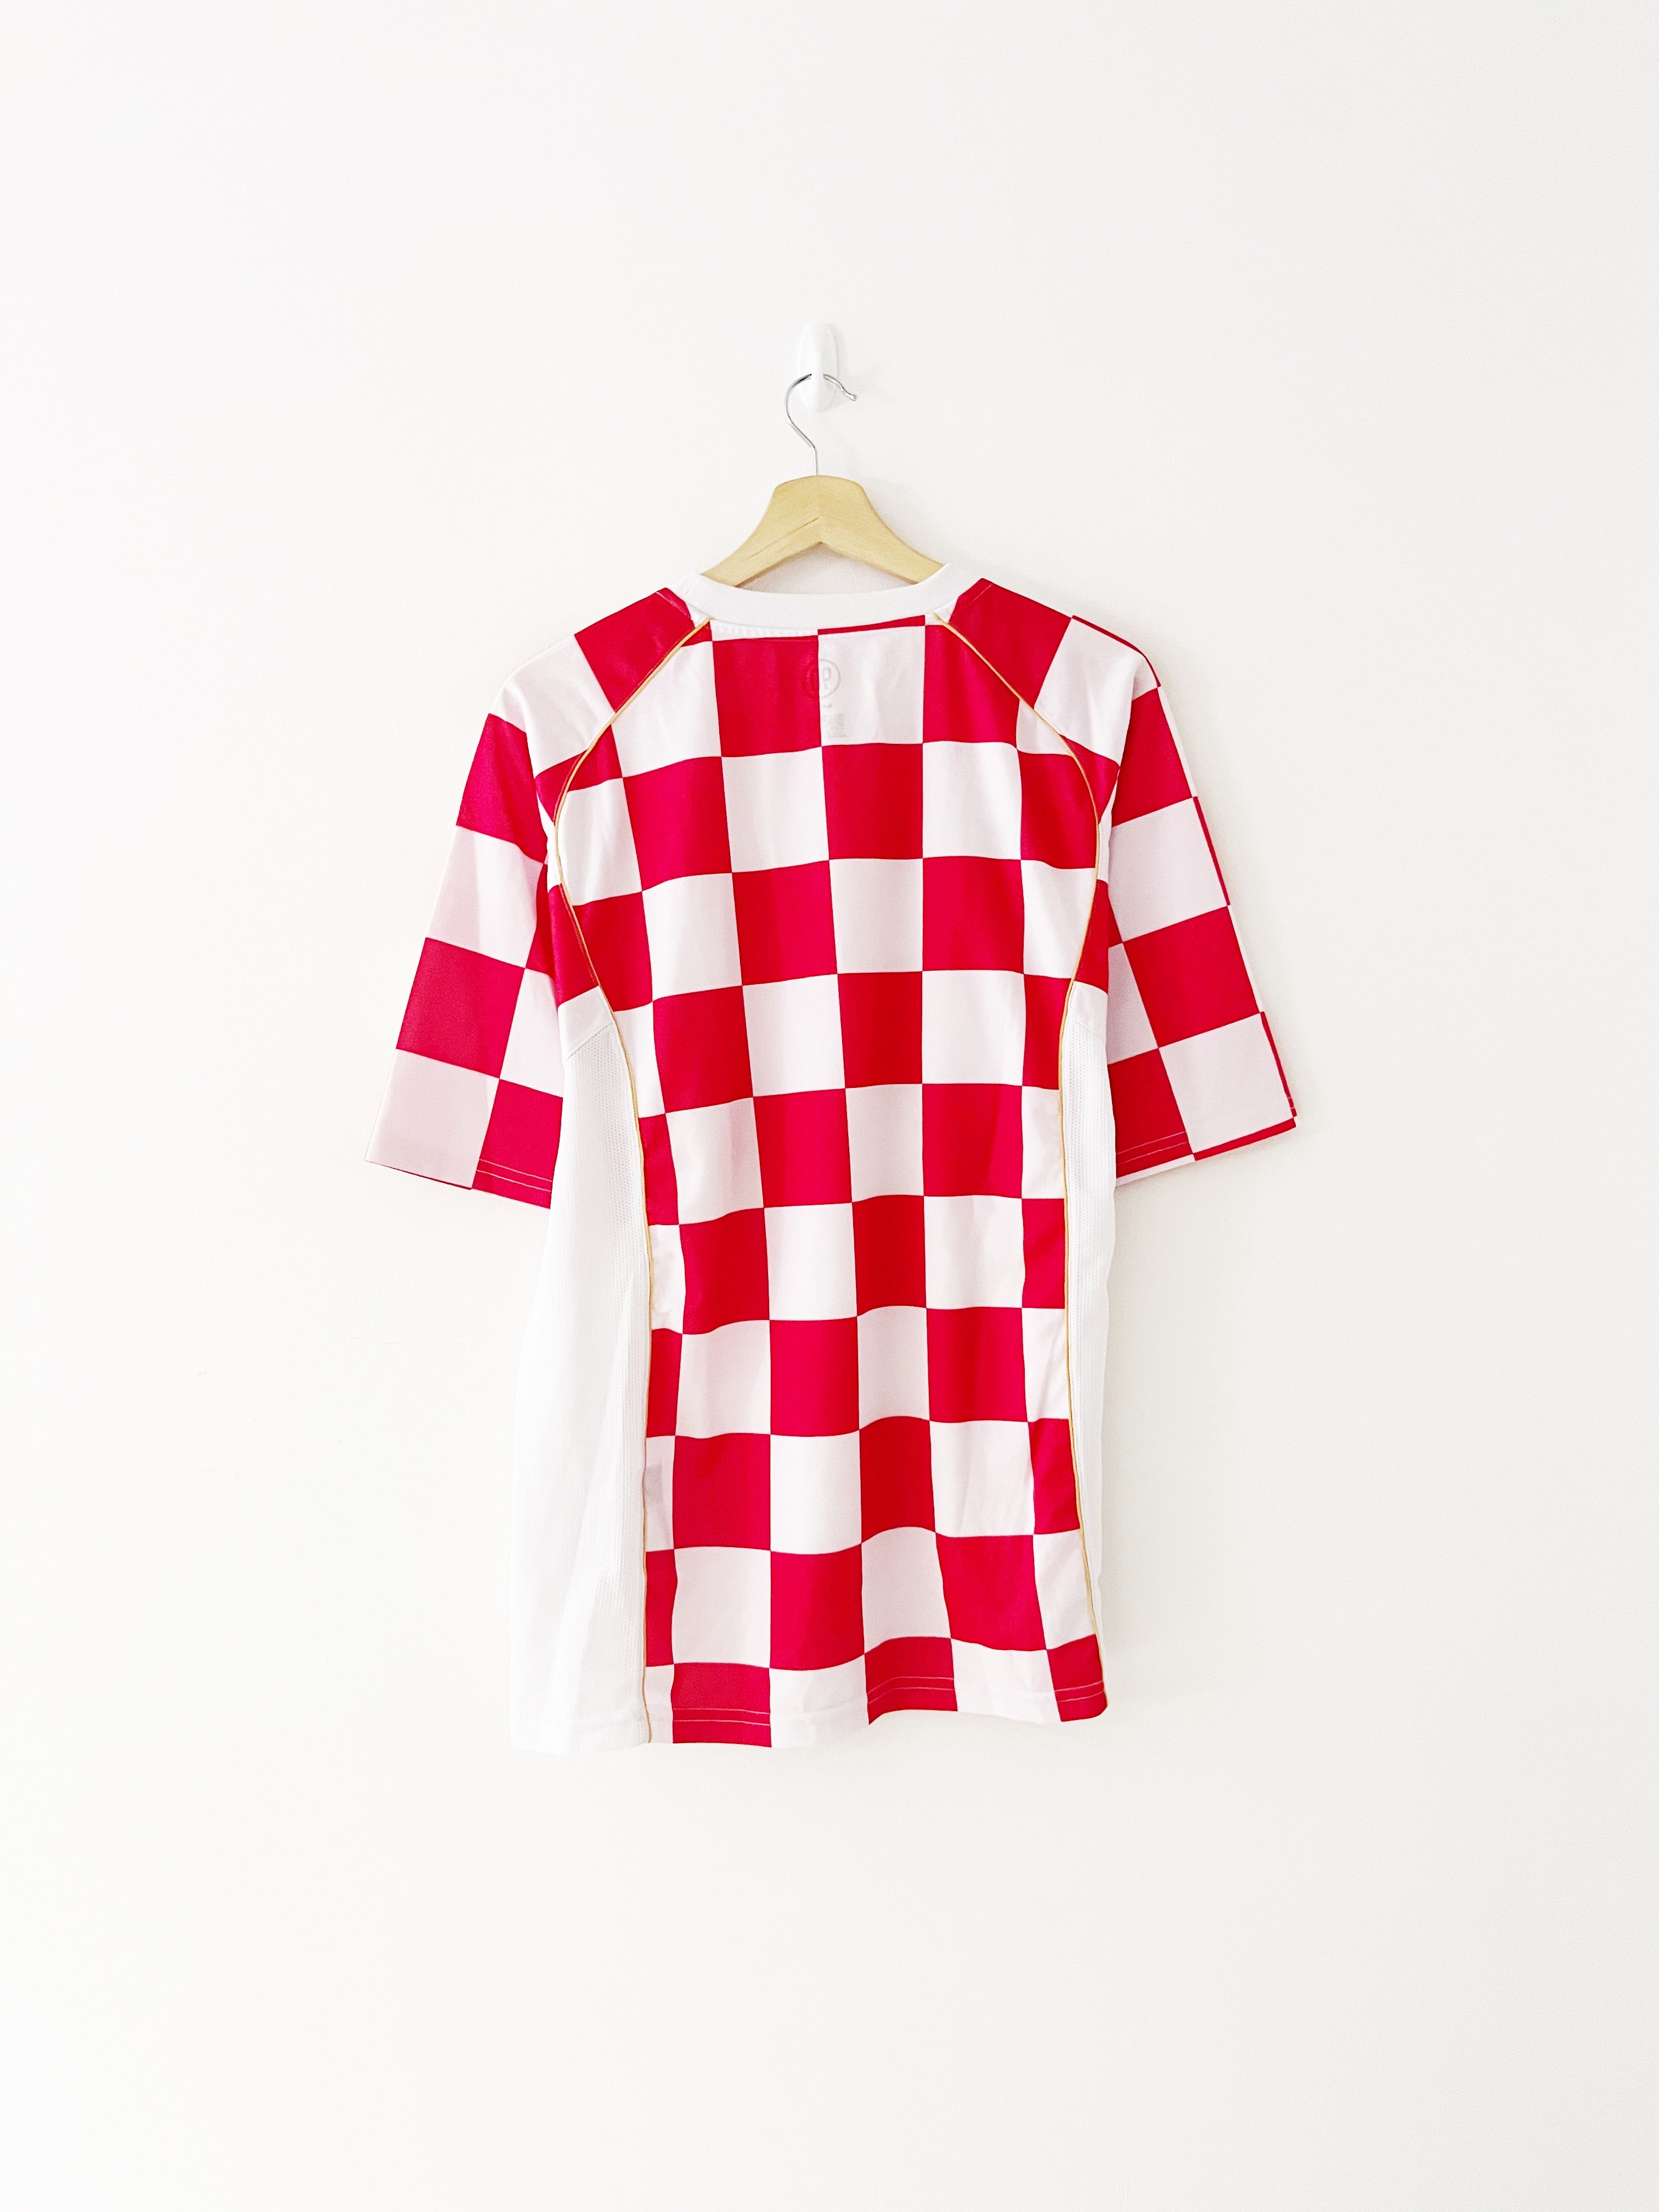 2004/06 Croatia Basic Home Shirt (XL) 9/10